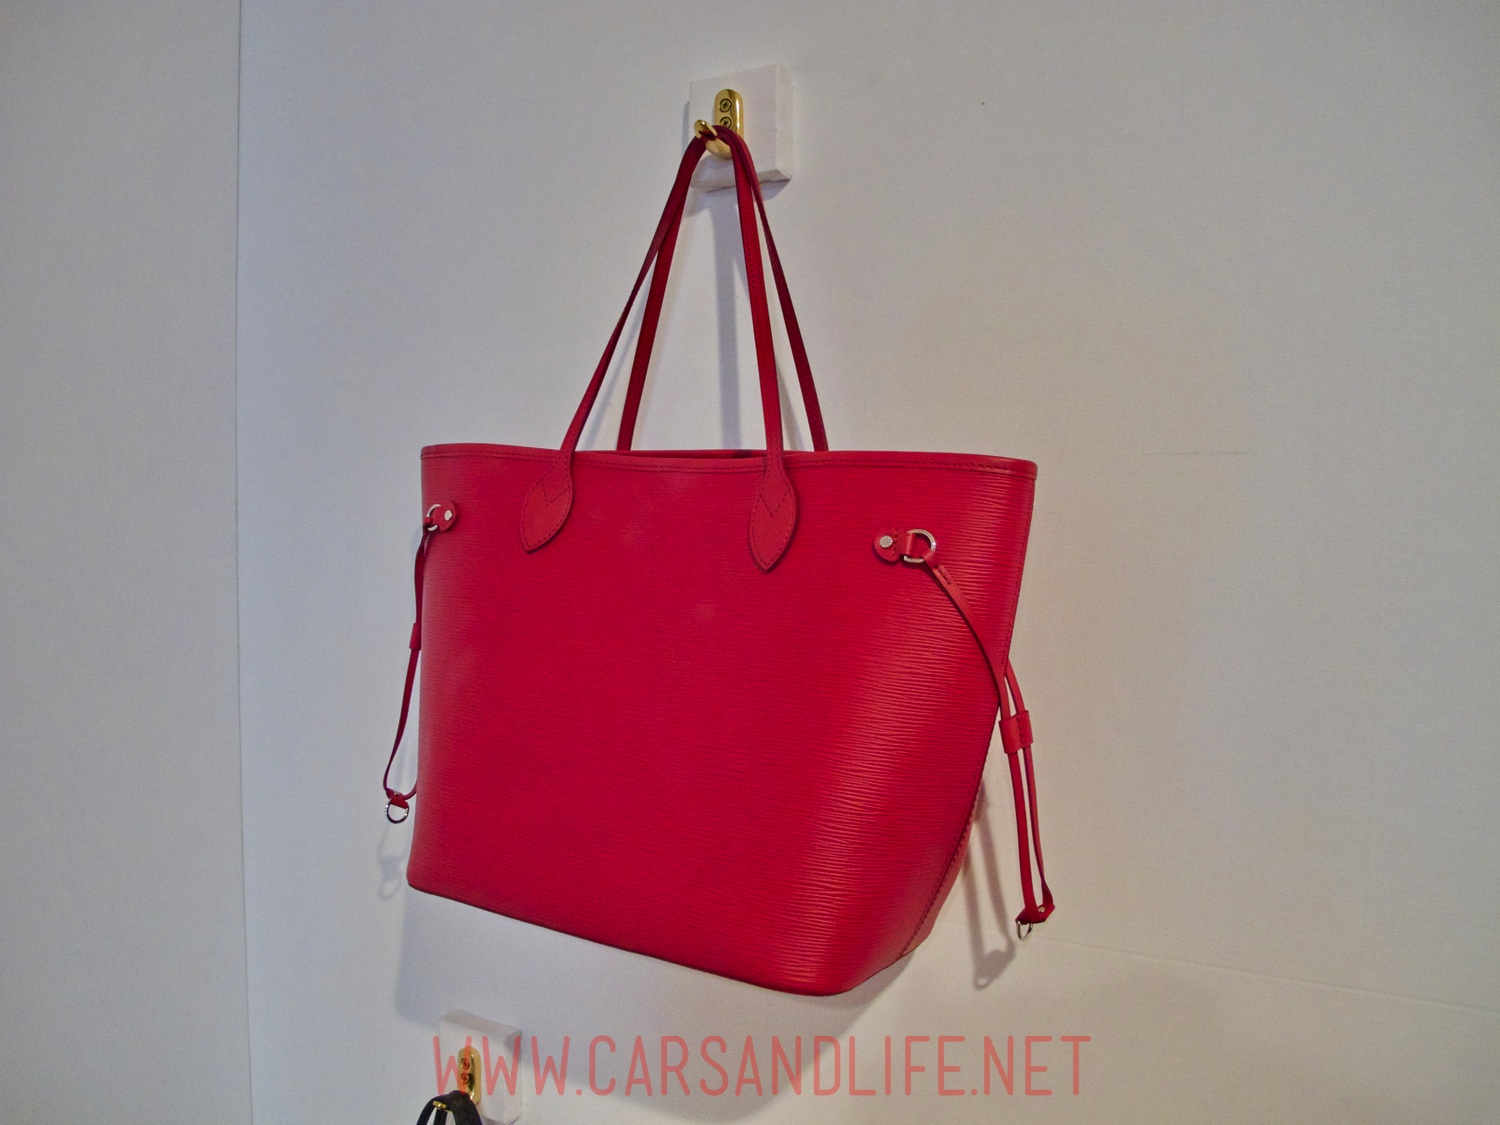 Louis Vuitton Cruise 2014 Handbag Collection - cars & life blog | cars fashion lifestyle